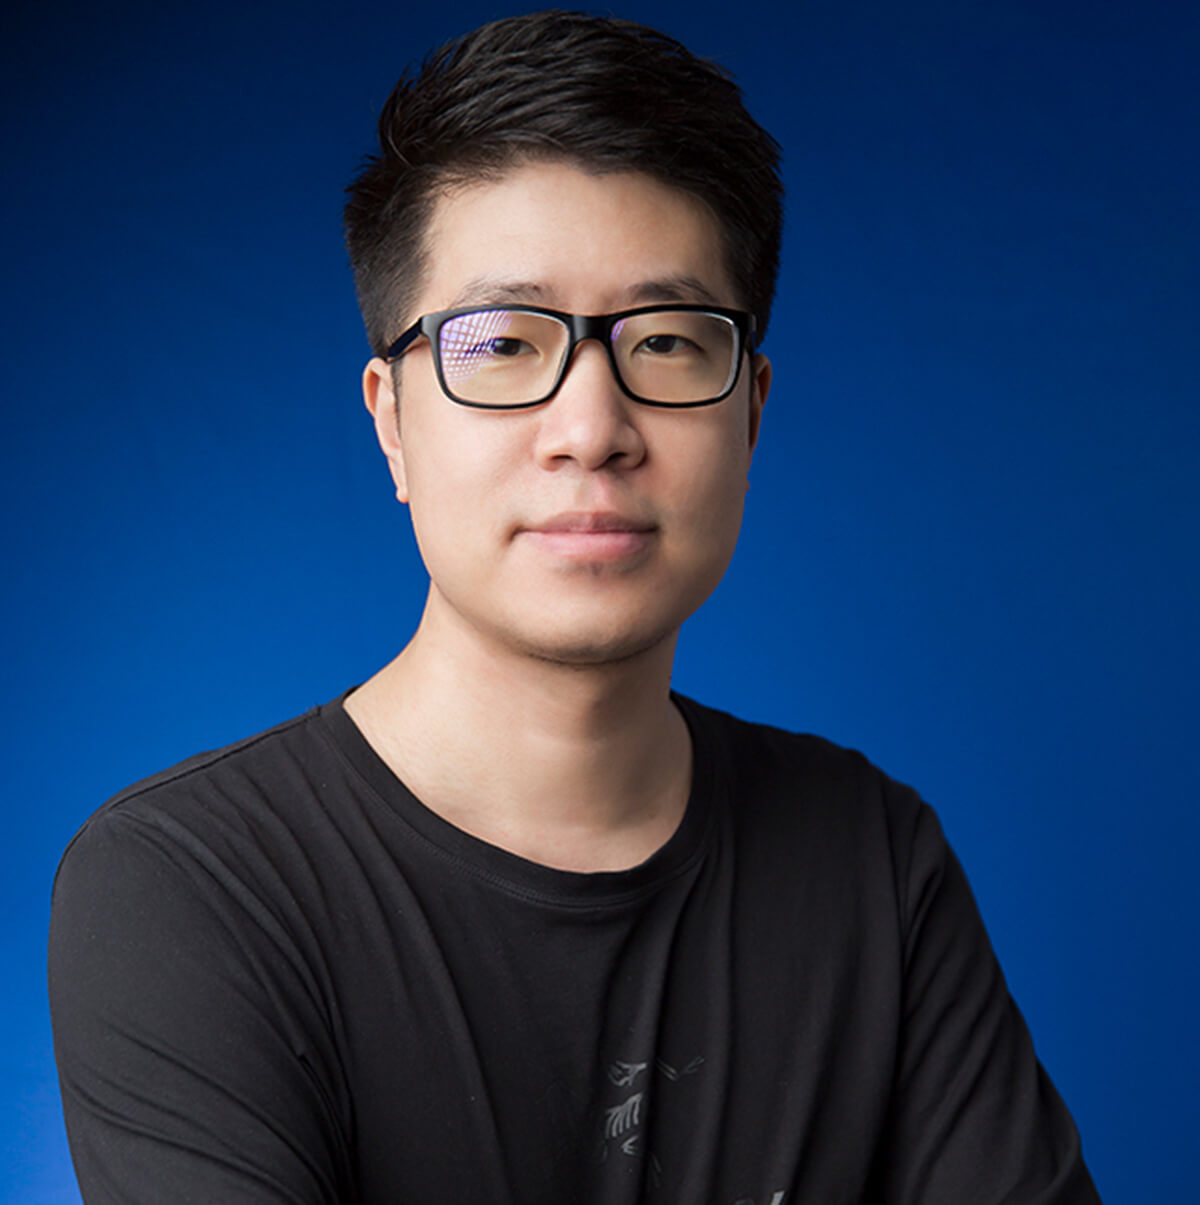 A headshot of DigiPen graduate Aaron Yang.